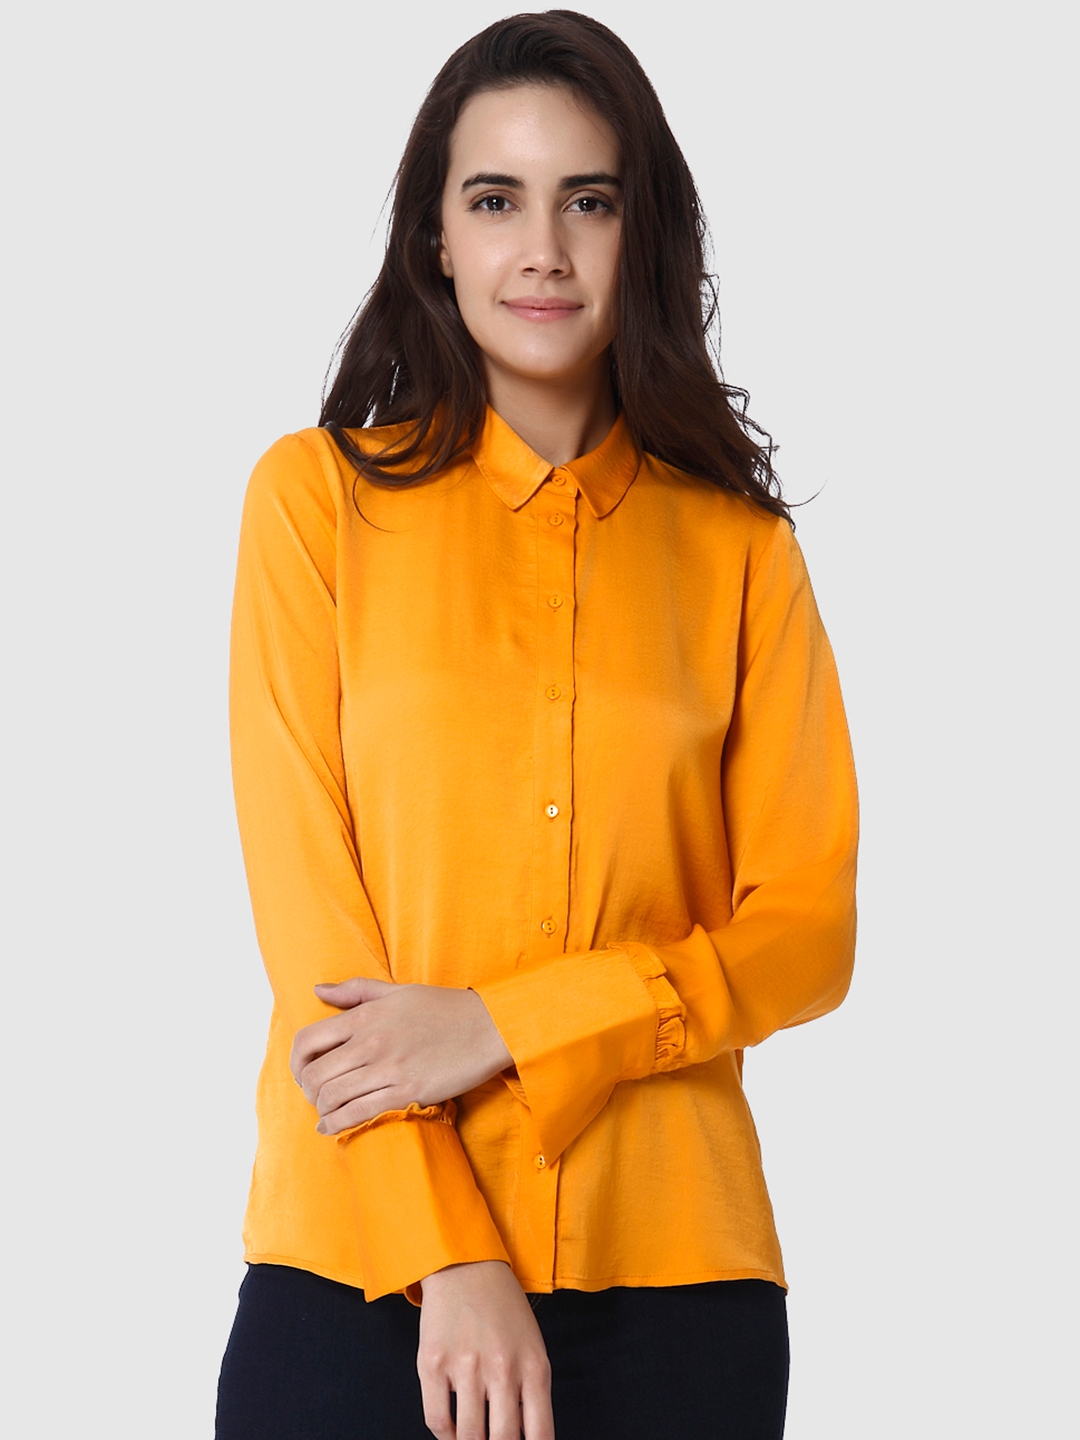 Vero Moda Women Mustard Yellow Regular Fit Solid Casual Shirt